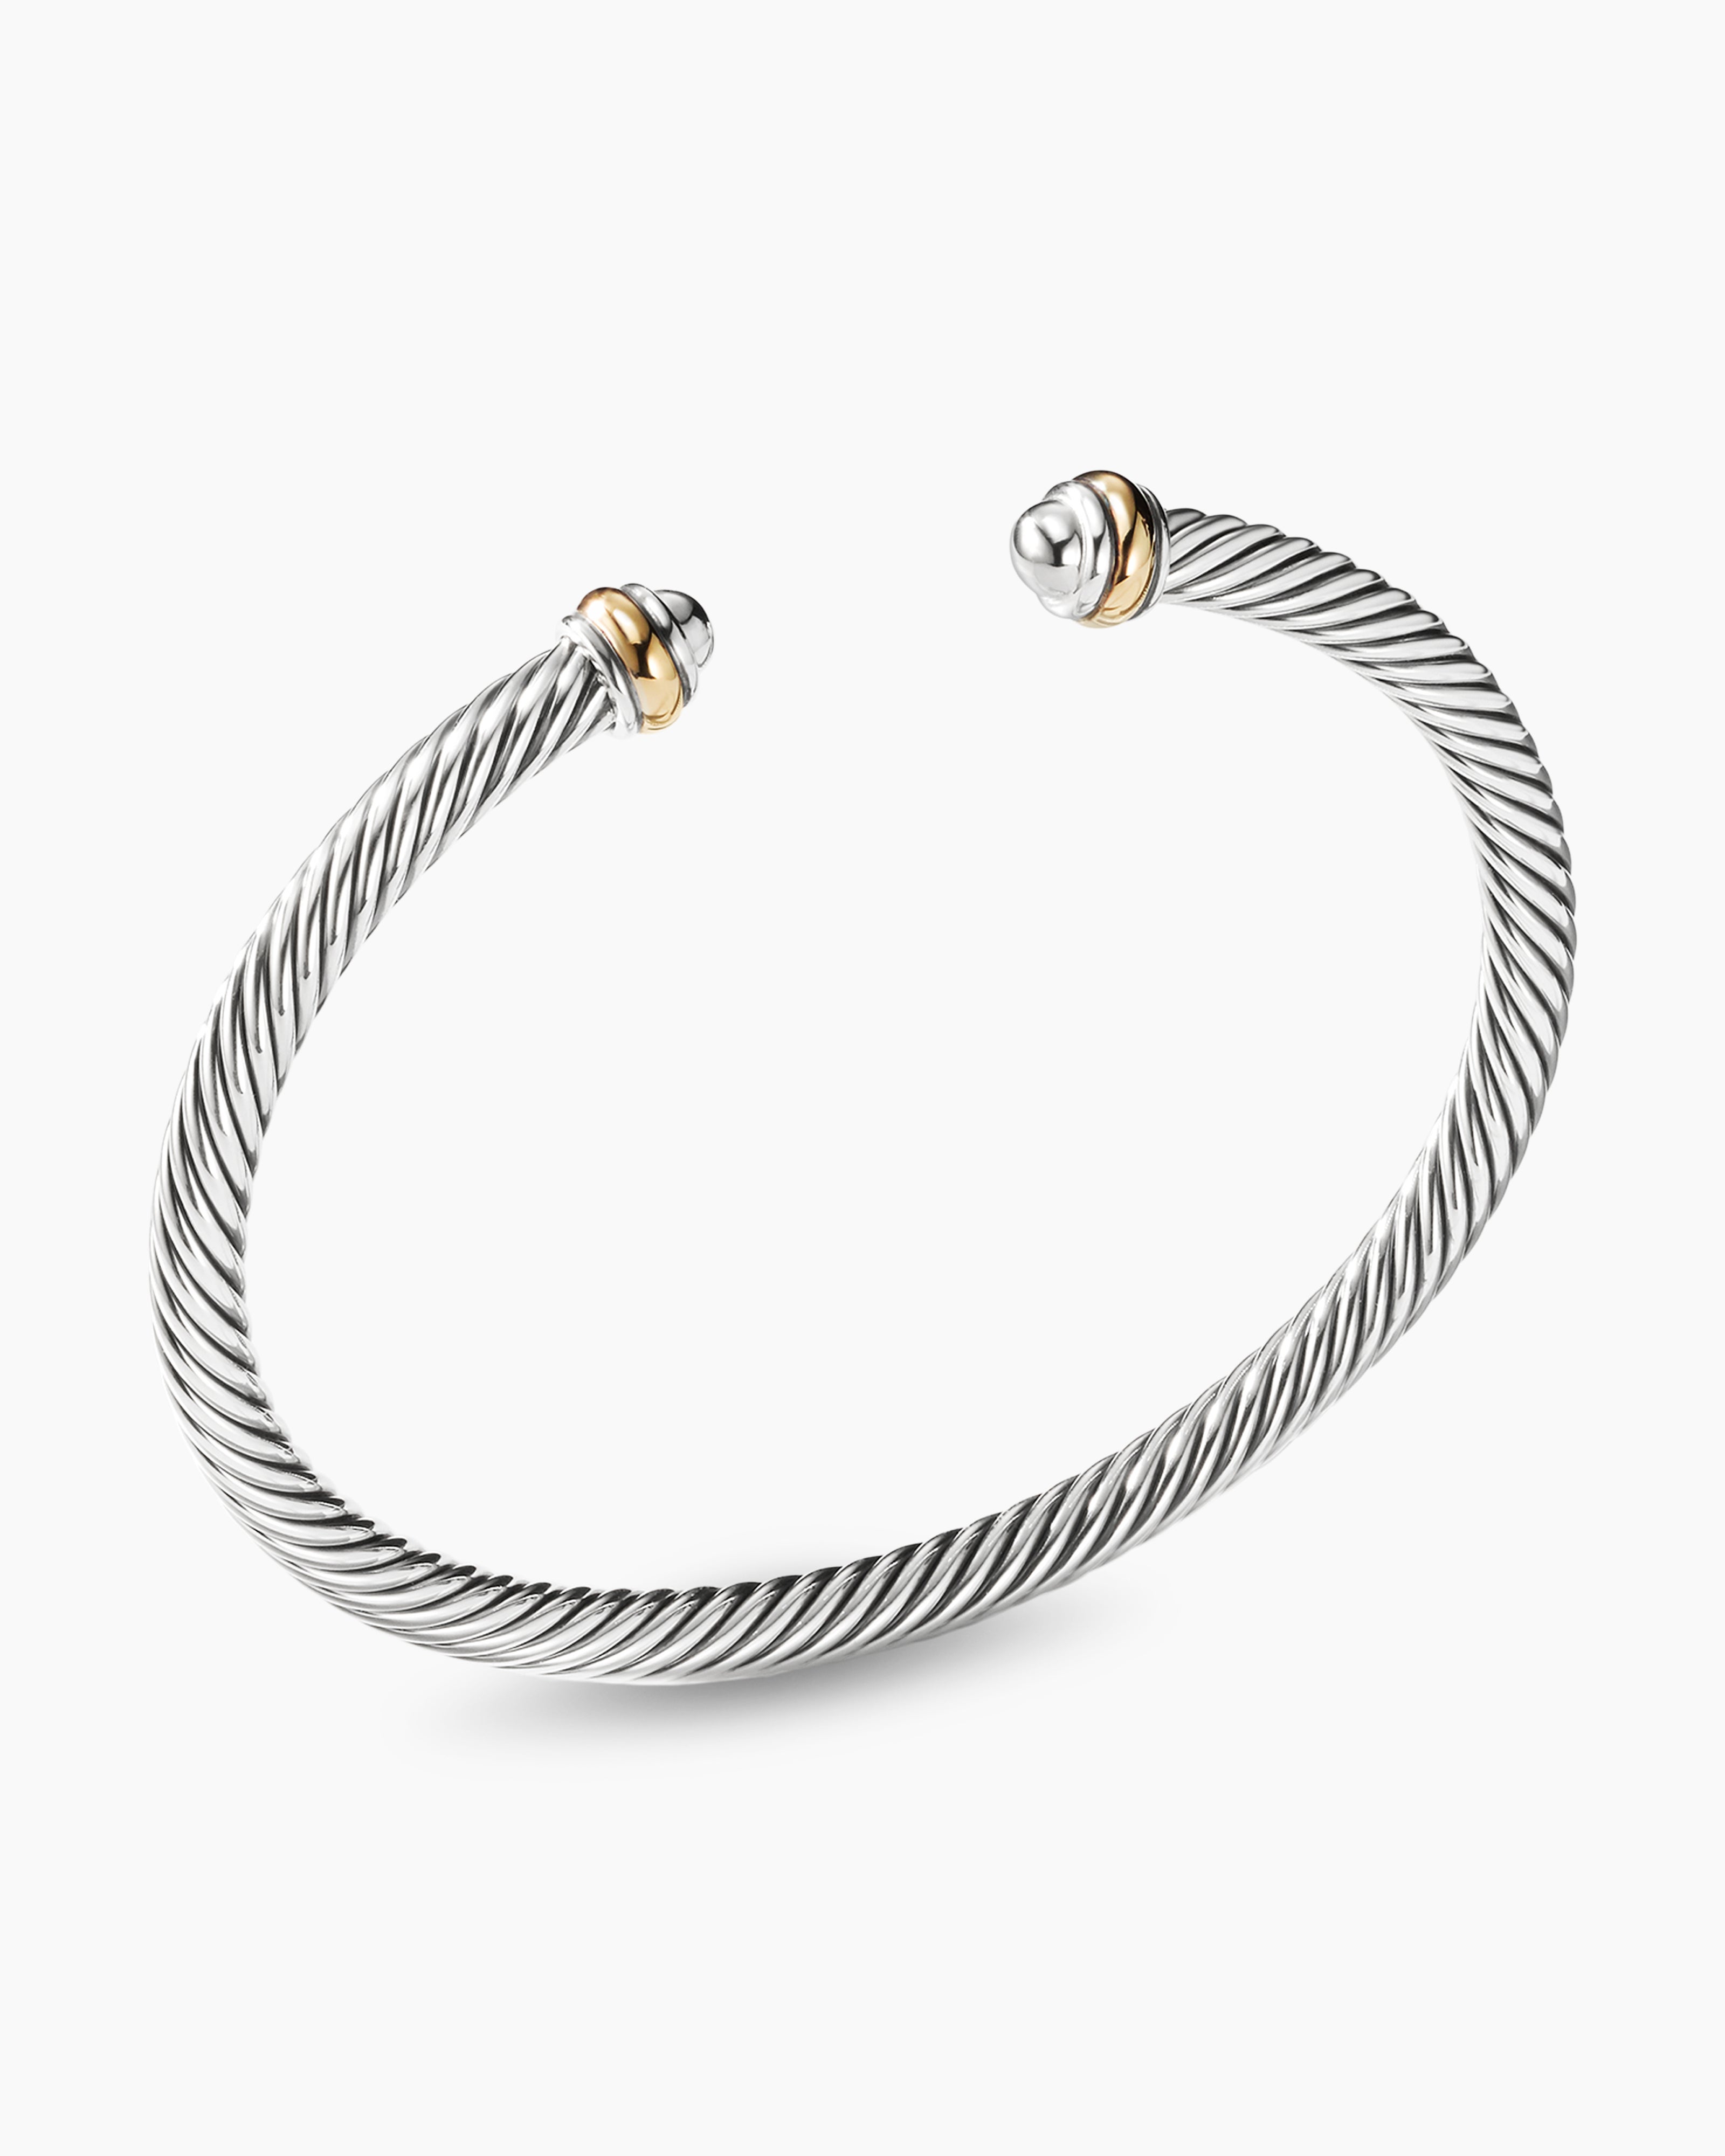 Beautifully Designed Silver Bracelet For Girls & Ladies - Forever Silver